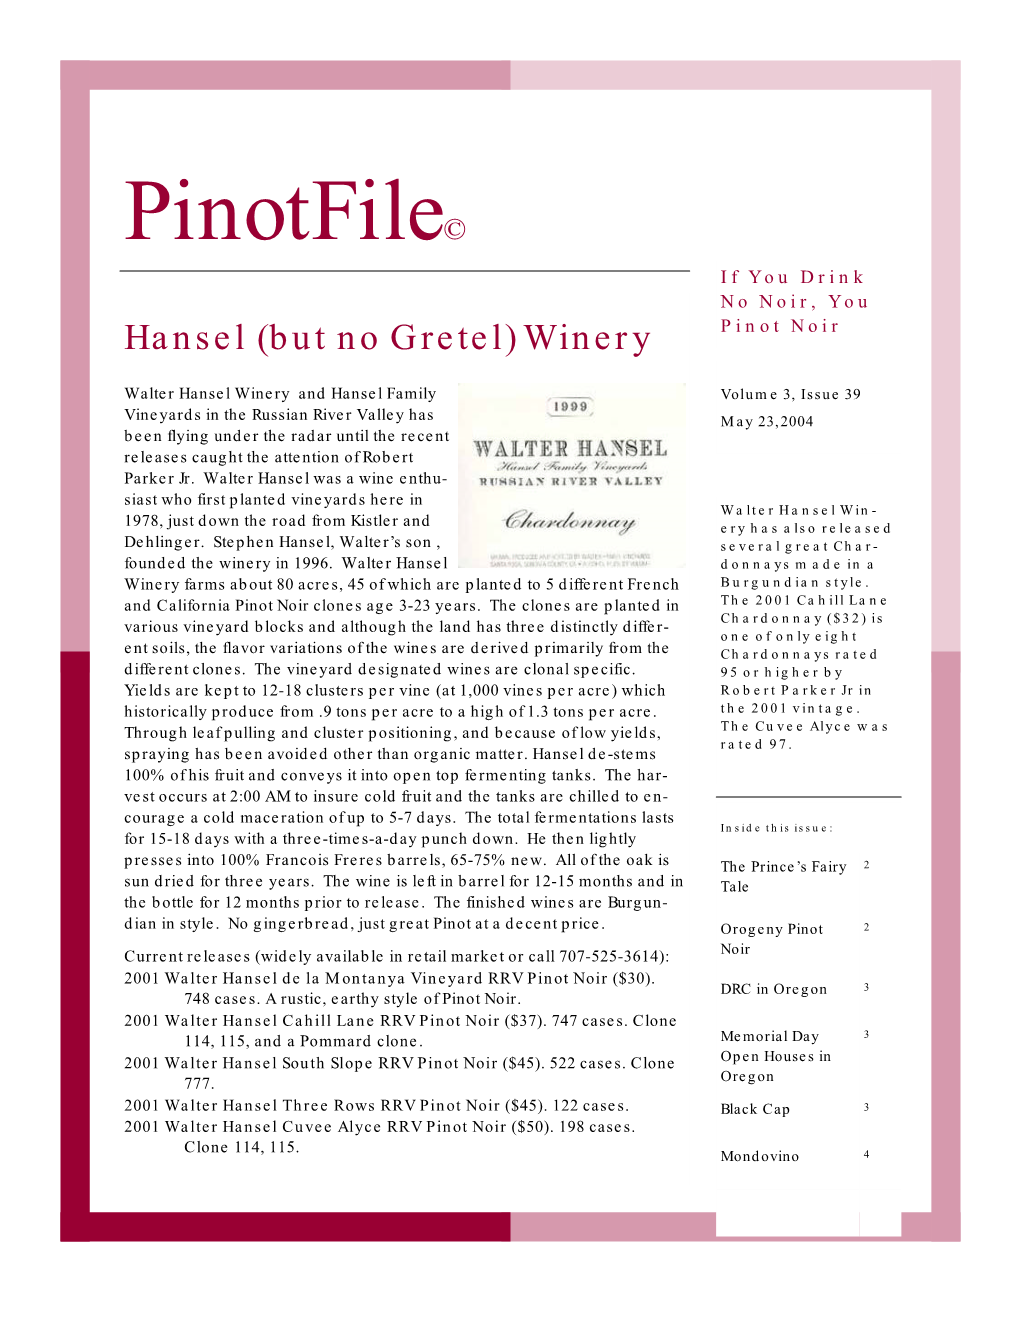 Hansel (But No Gretel) Winery Pinot Noir